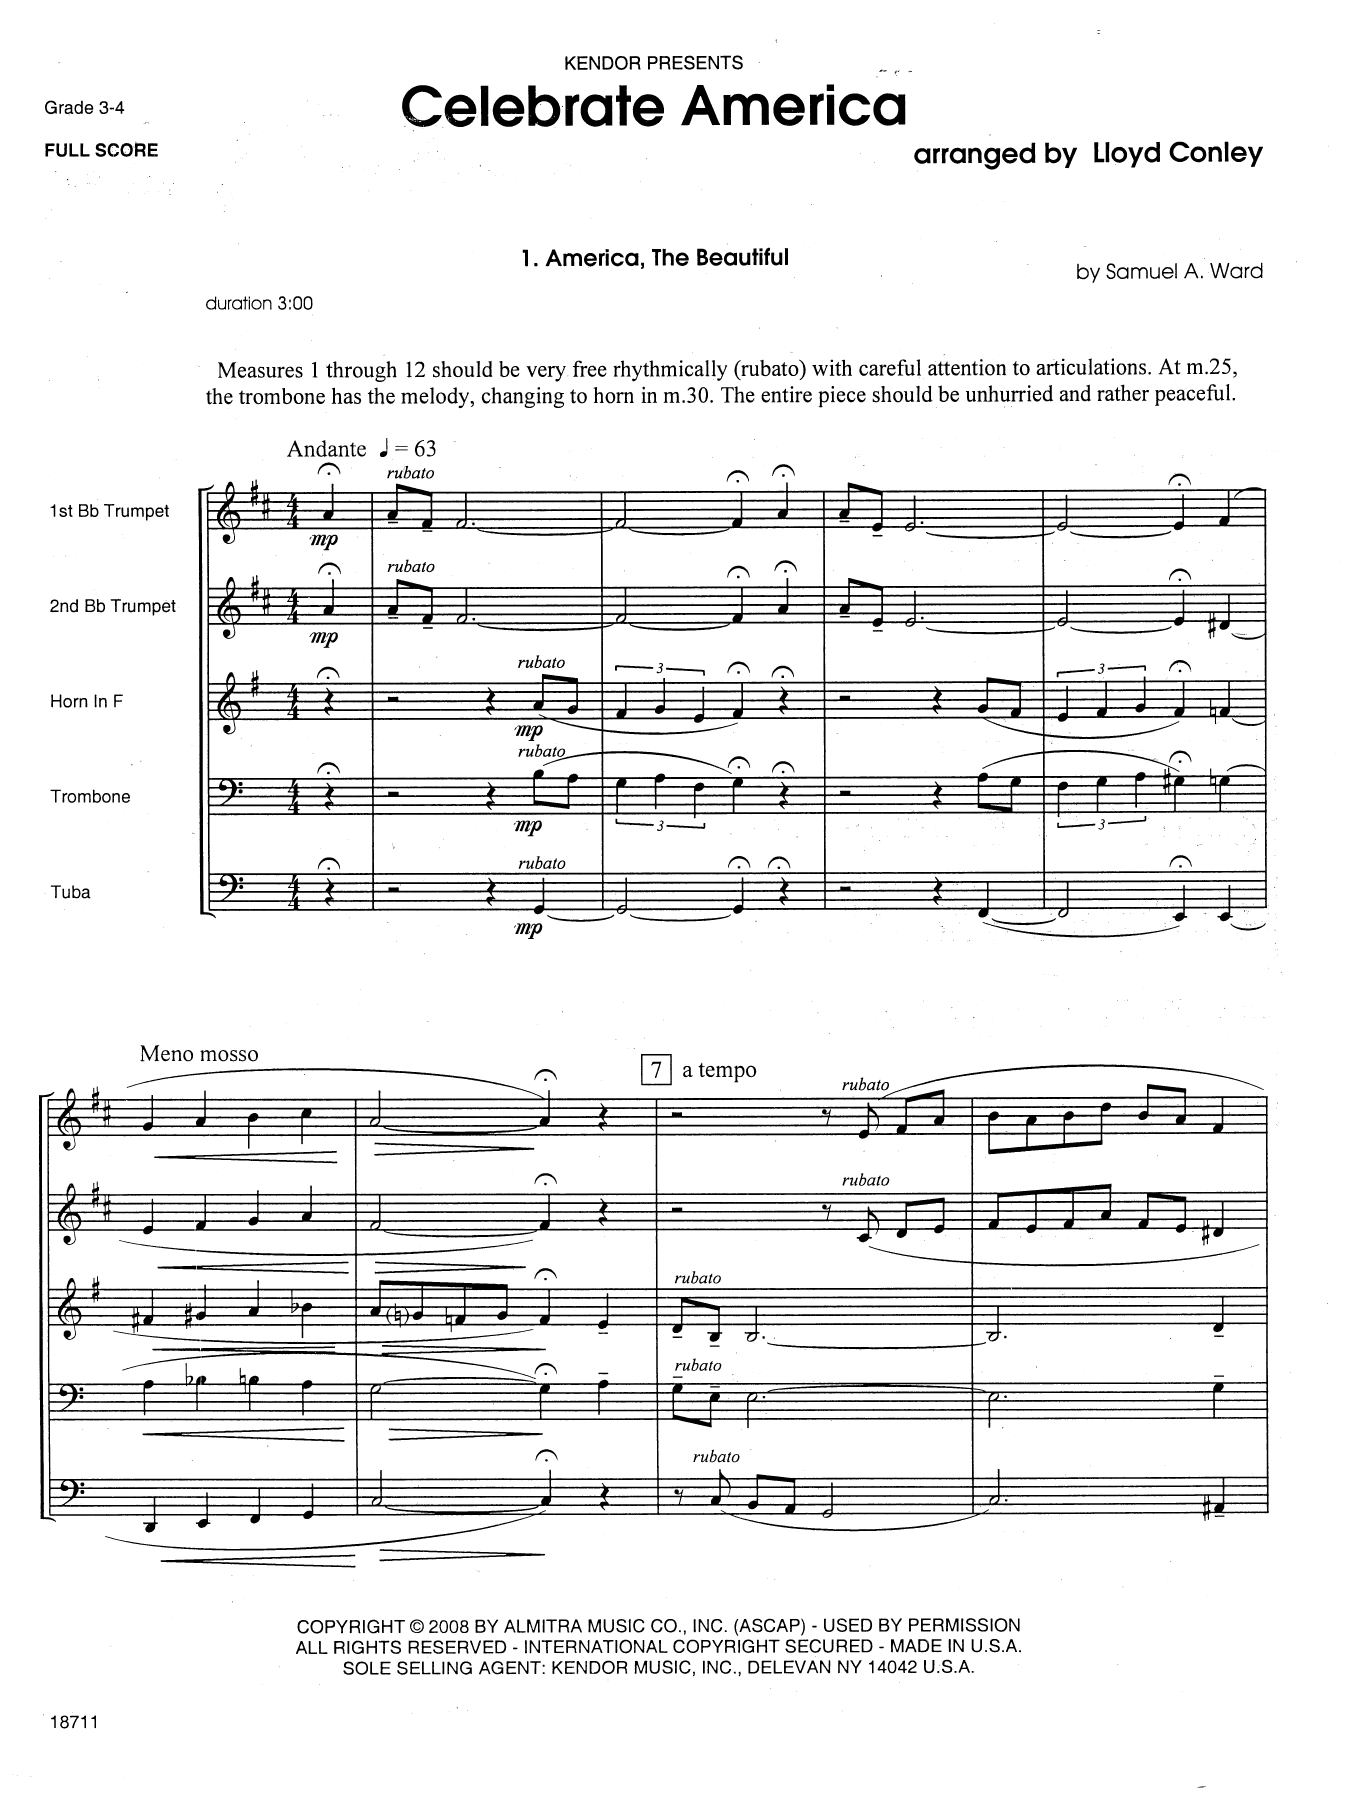 Download Lloyd Conley Celebrate America - Full Score Sheet Music